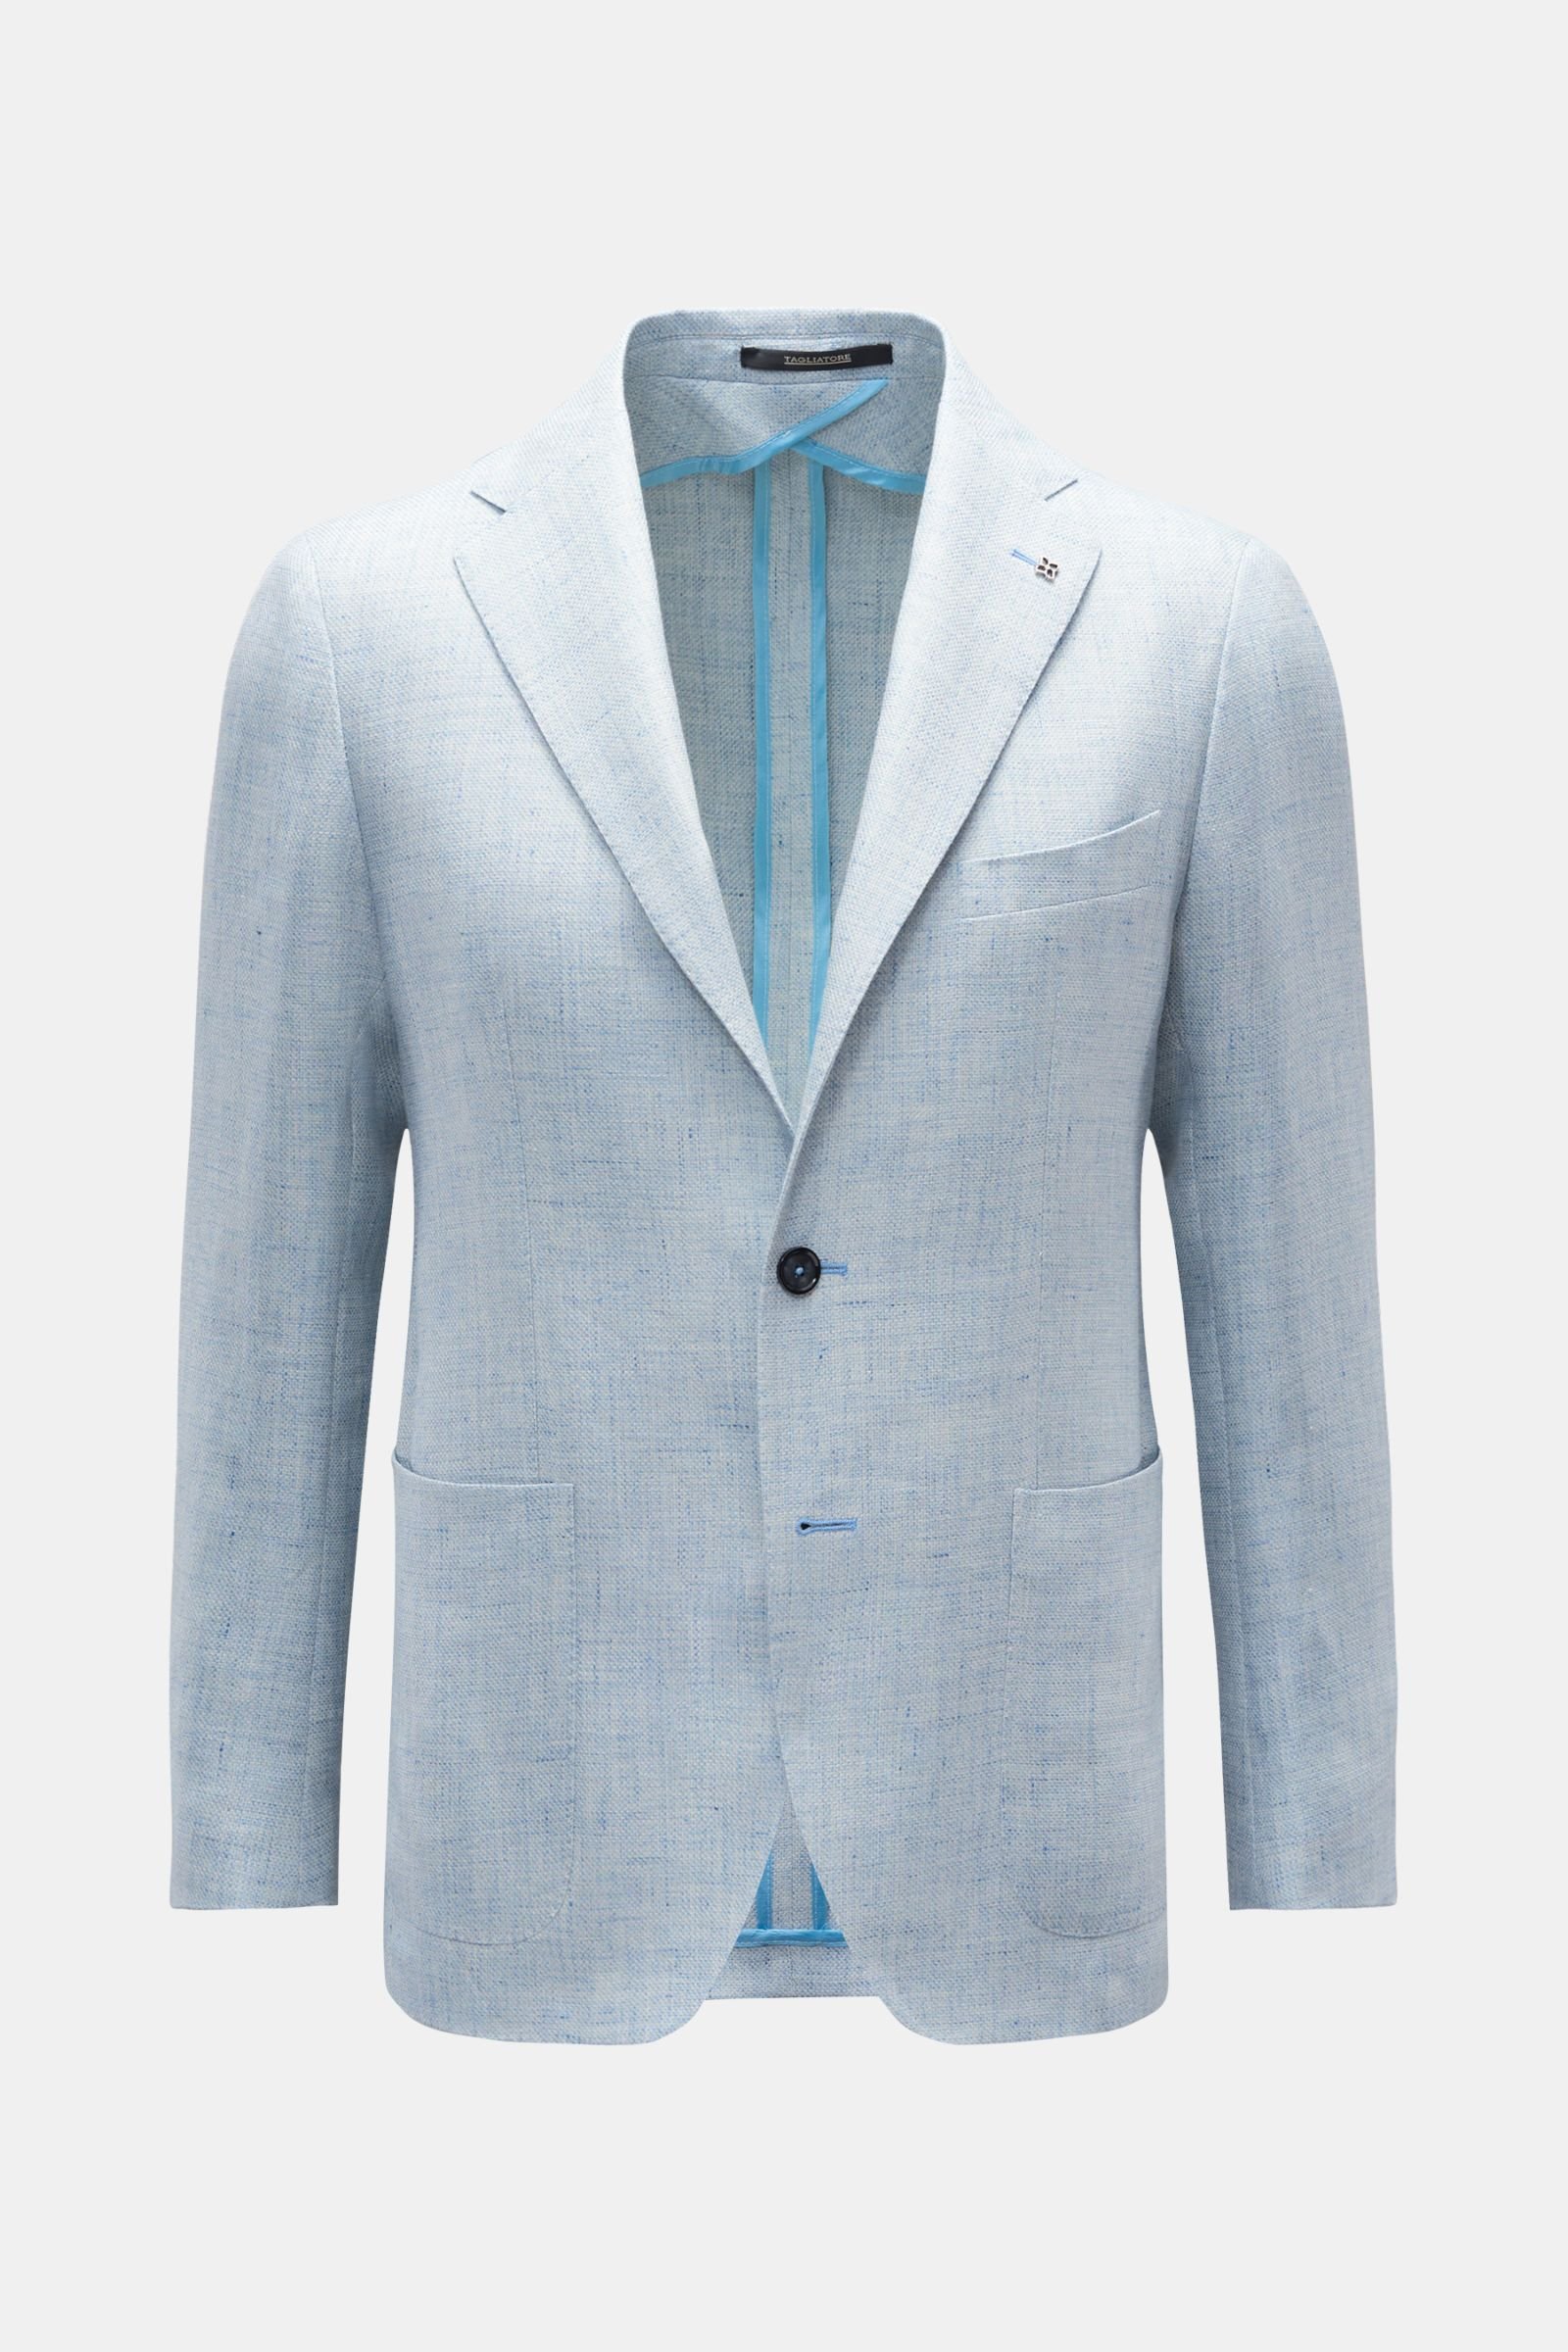 Smart-casual jacket pastel blue